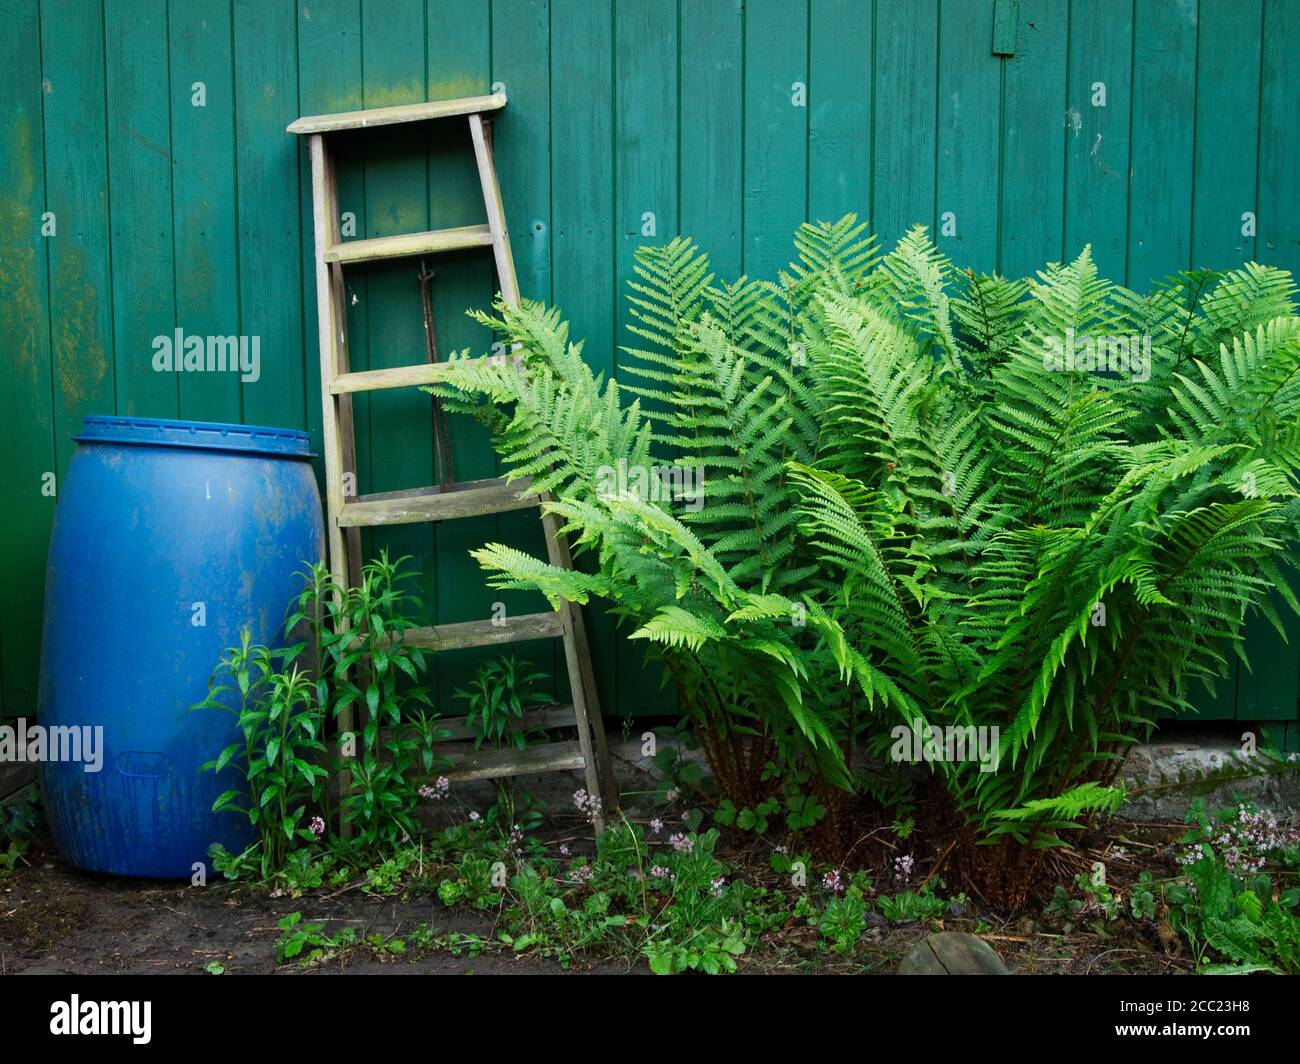 Germany, Hessen, Frankfurt, Garden with ladder, rain barrel, fern and osmundaceae Stock Photo